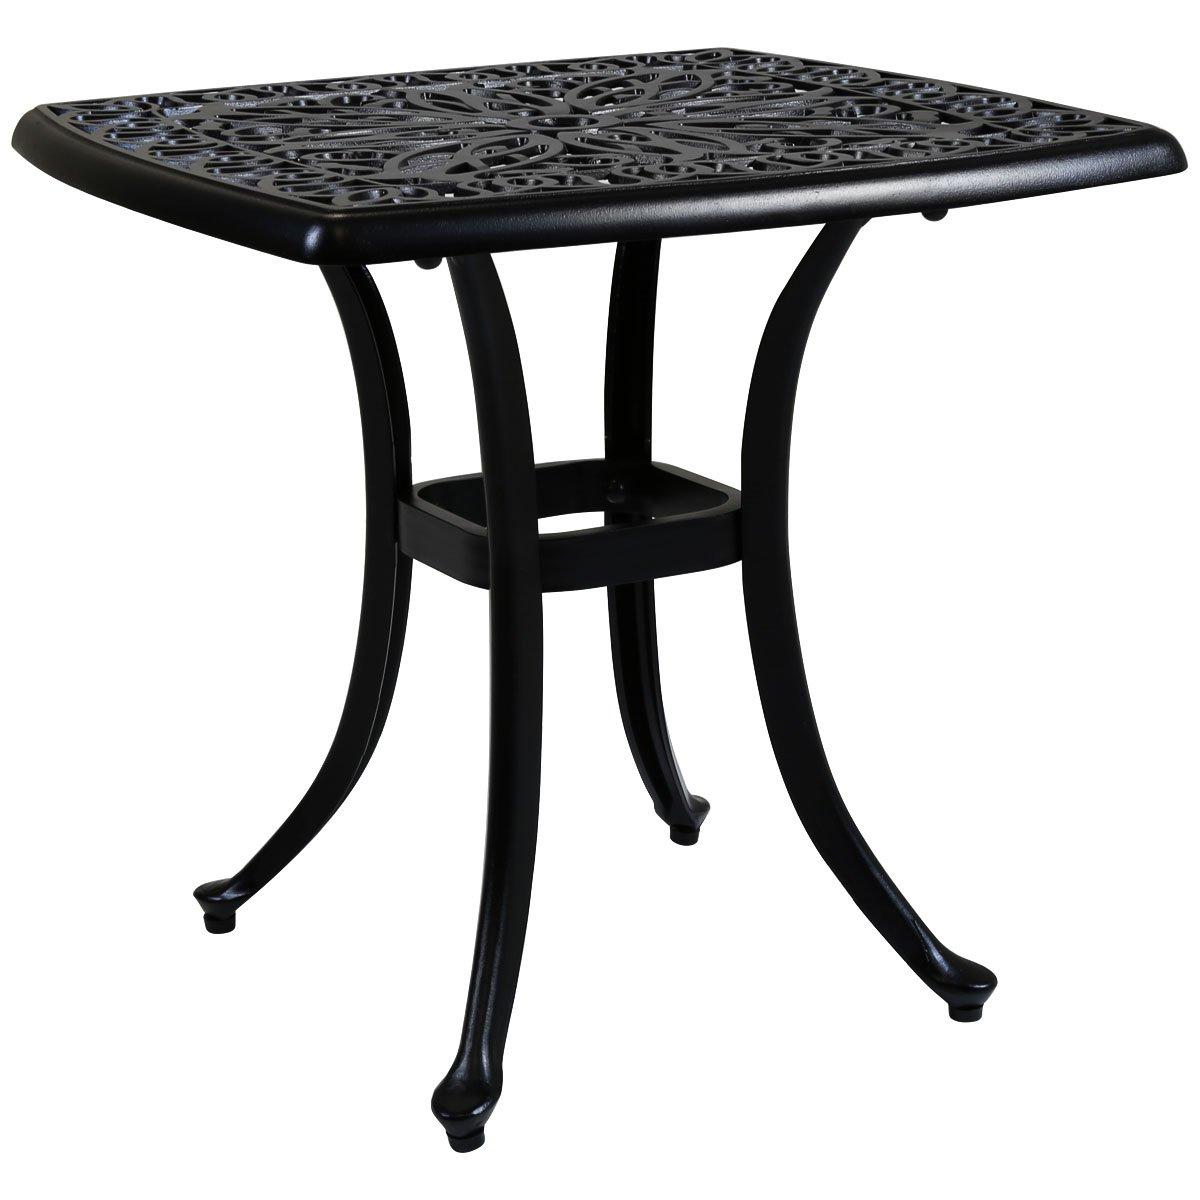 Cast Aluminium Black Side Table Patio Poolside Garden Furniture